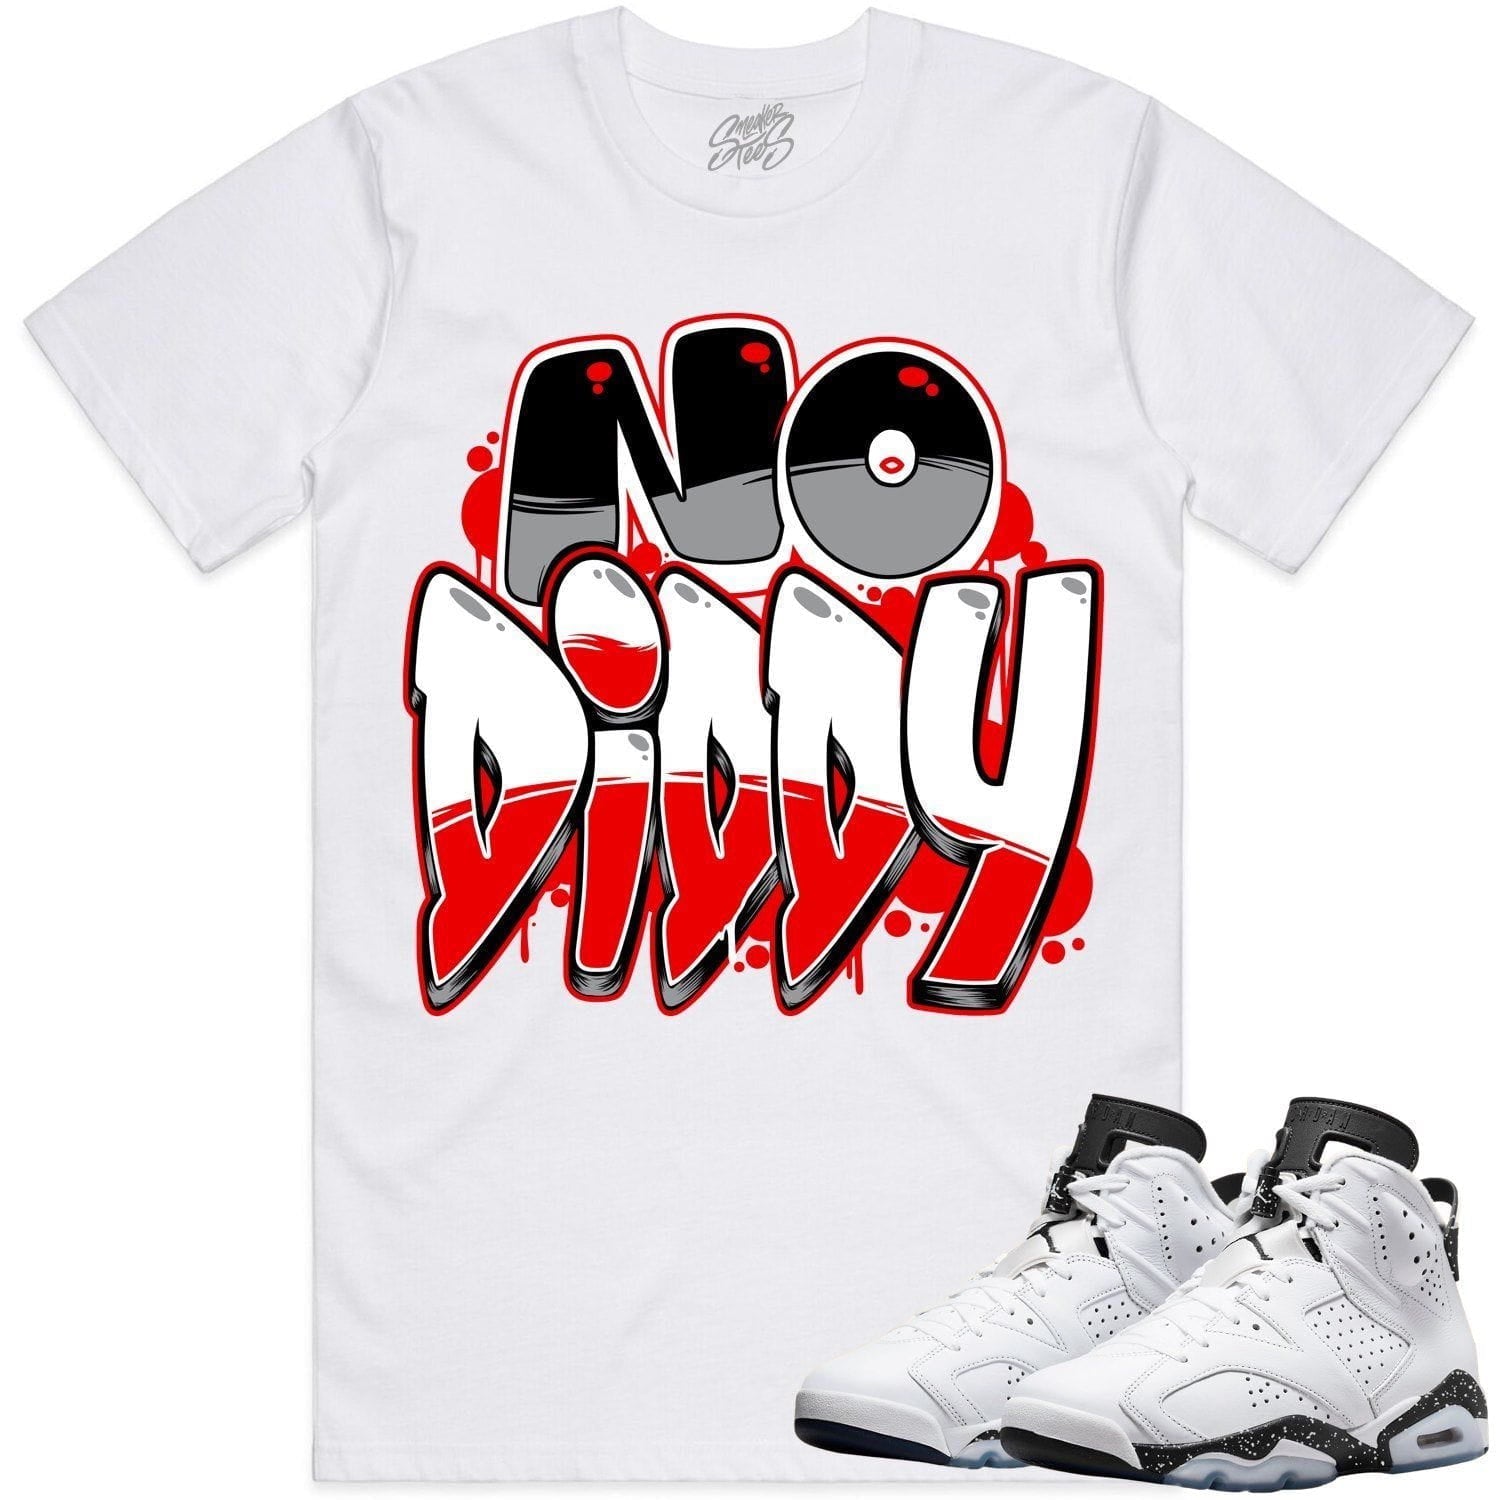 Oreo 6s Shirts - Jordan 6 Reverse Oreo 6s Sneaker Tees - No Diddy